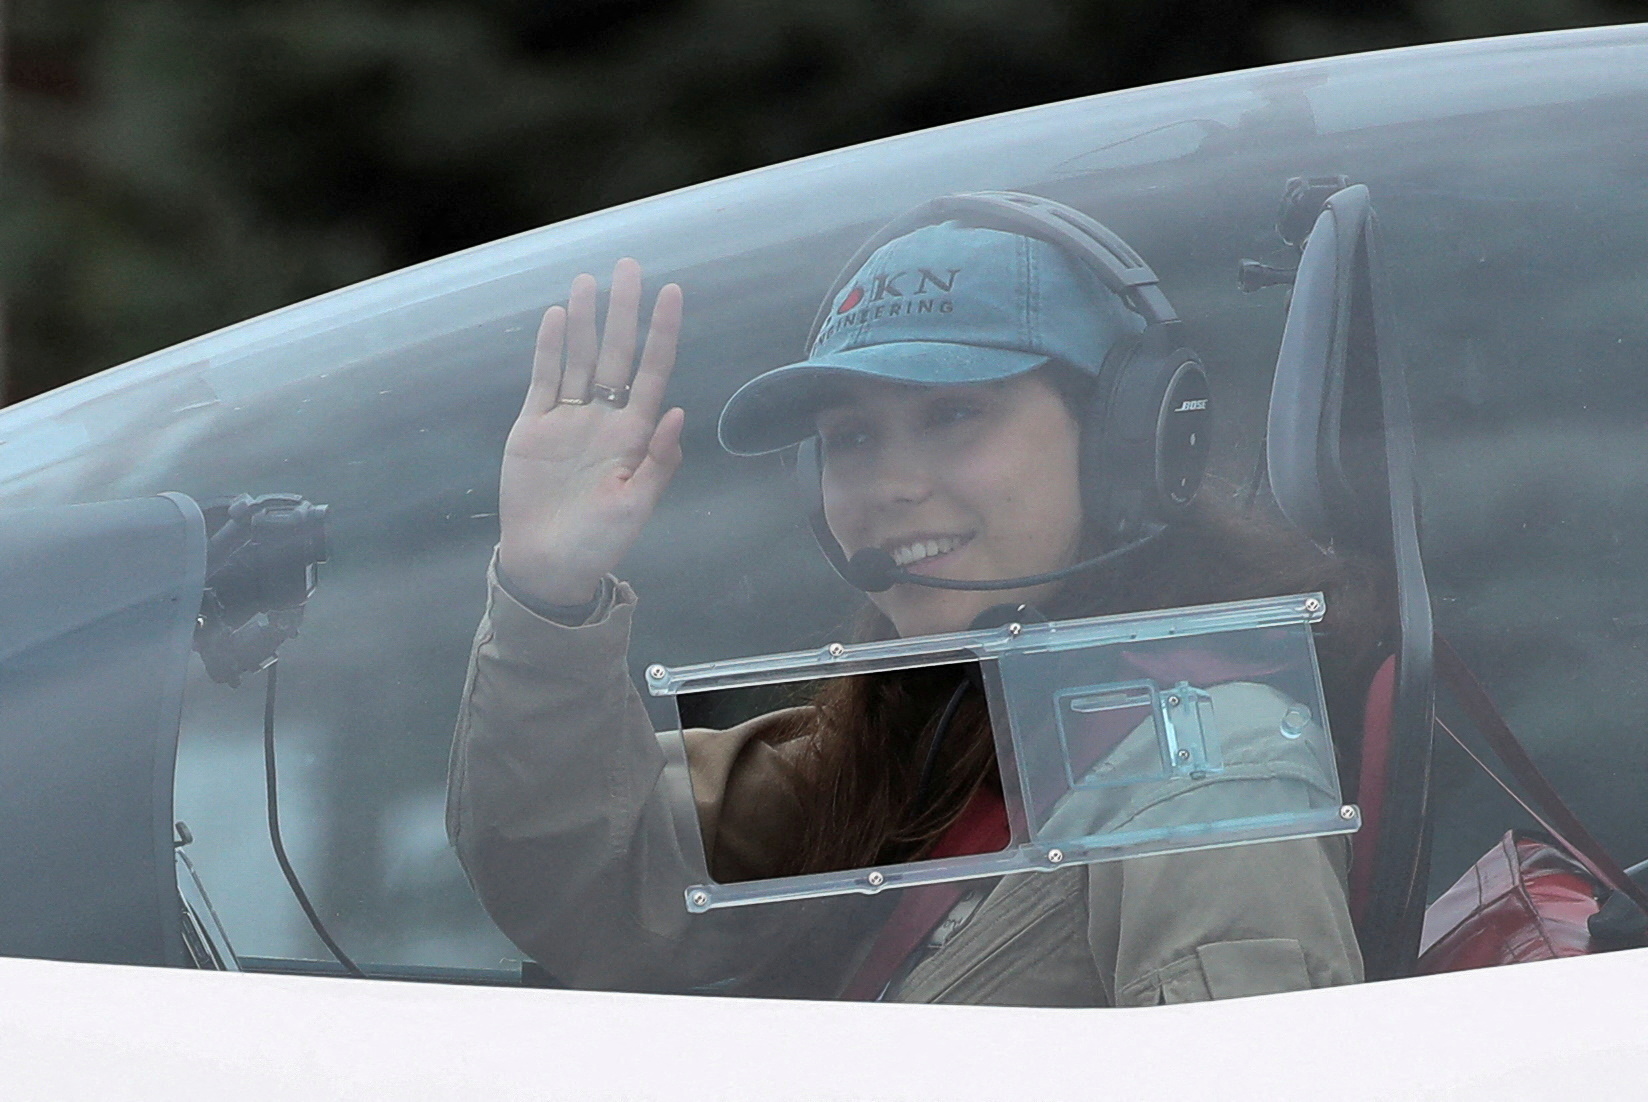 Belgian-British pilot Zara Rutherford aims to set aviation record, in Wevelgem